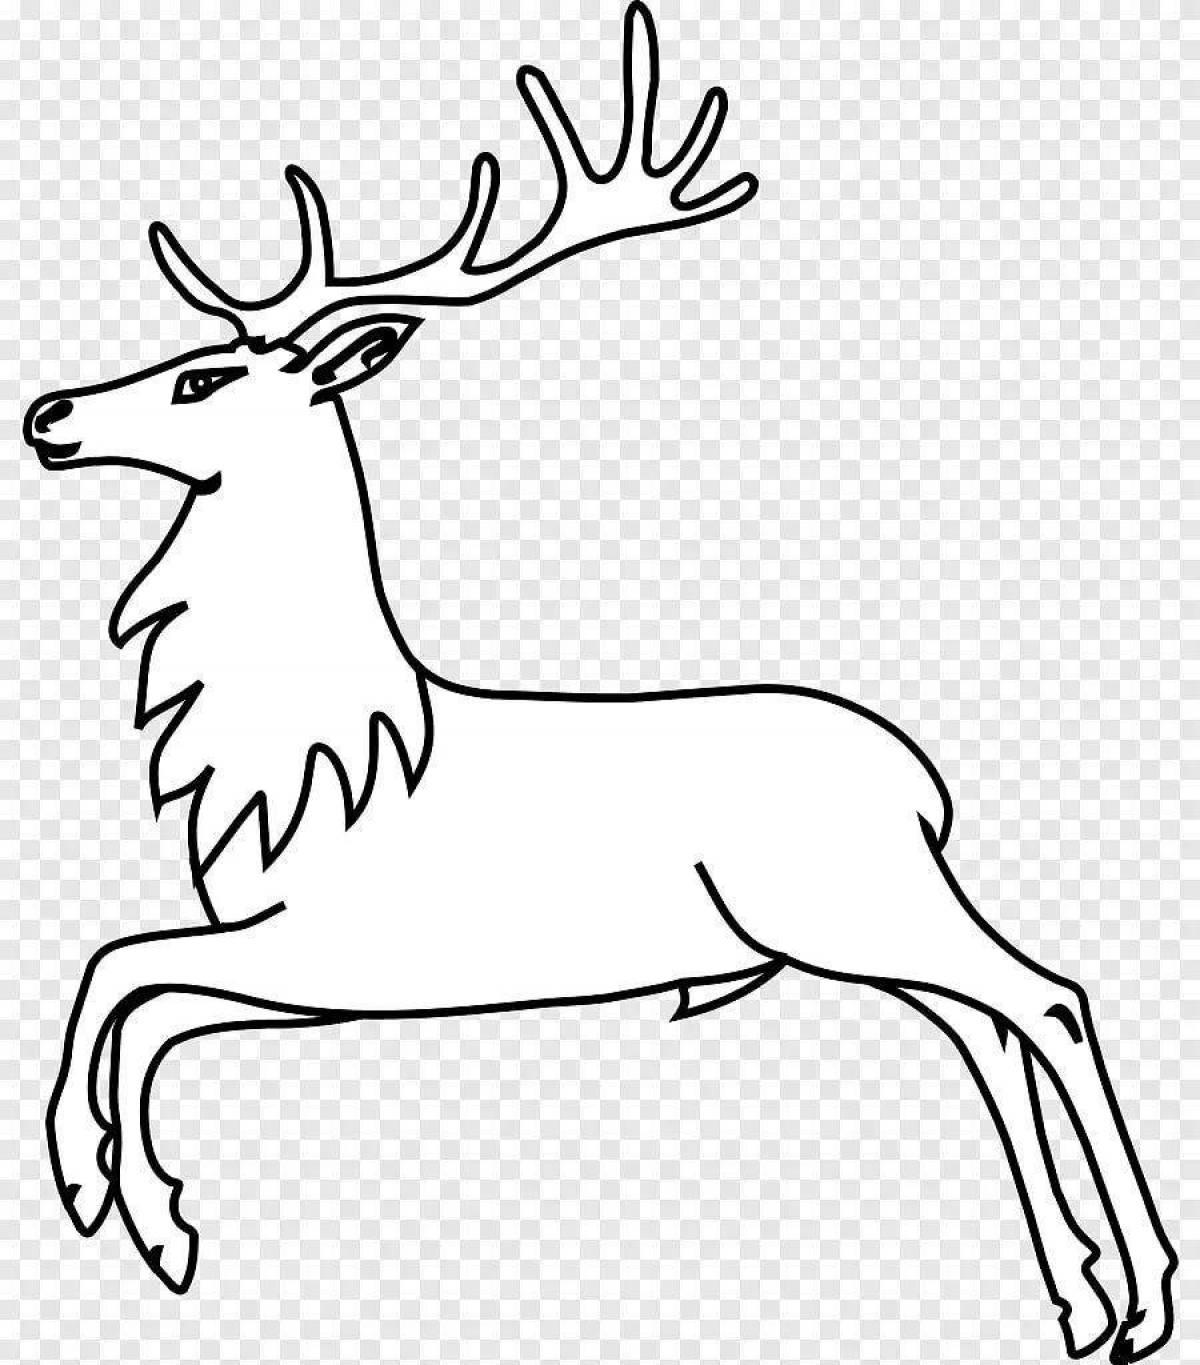 Witty deer coloring book